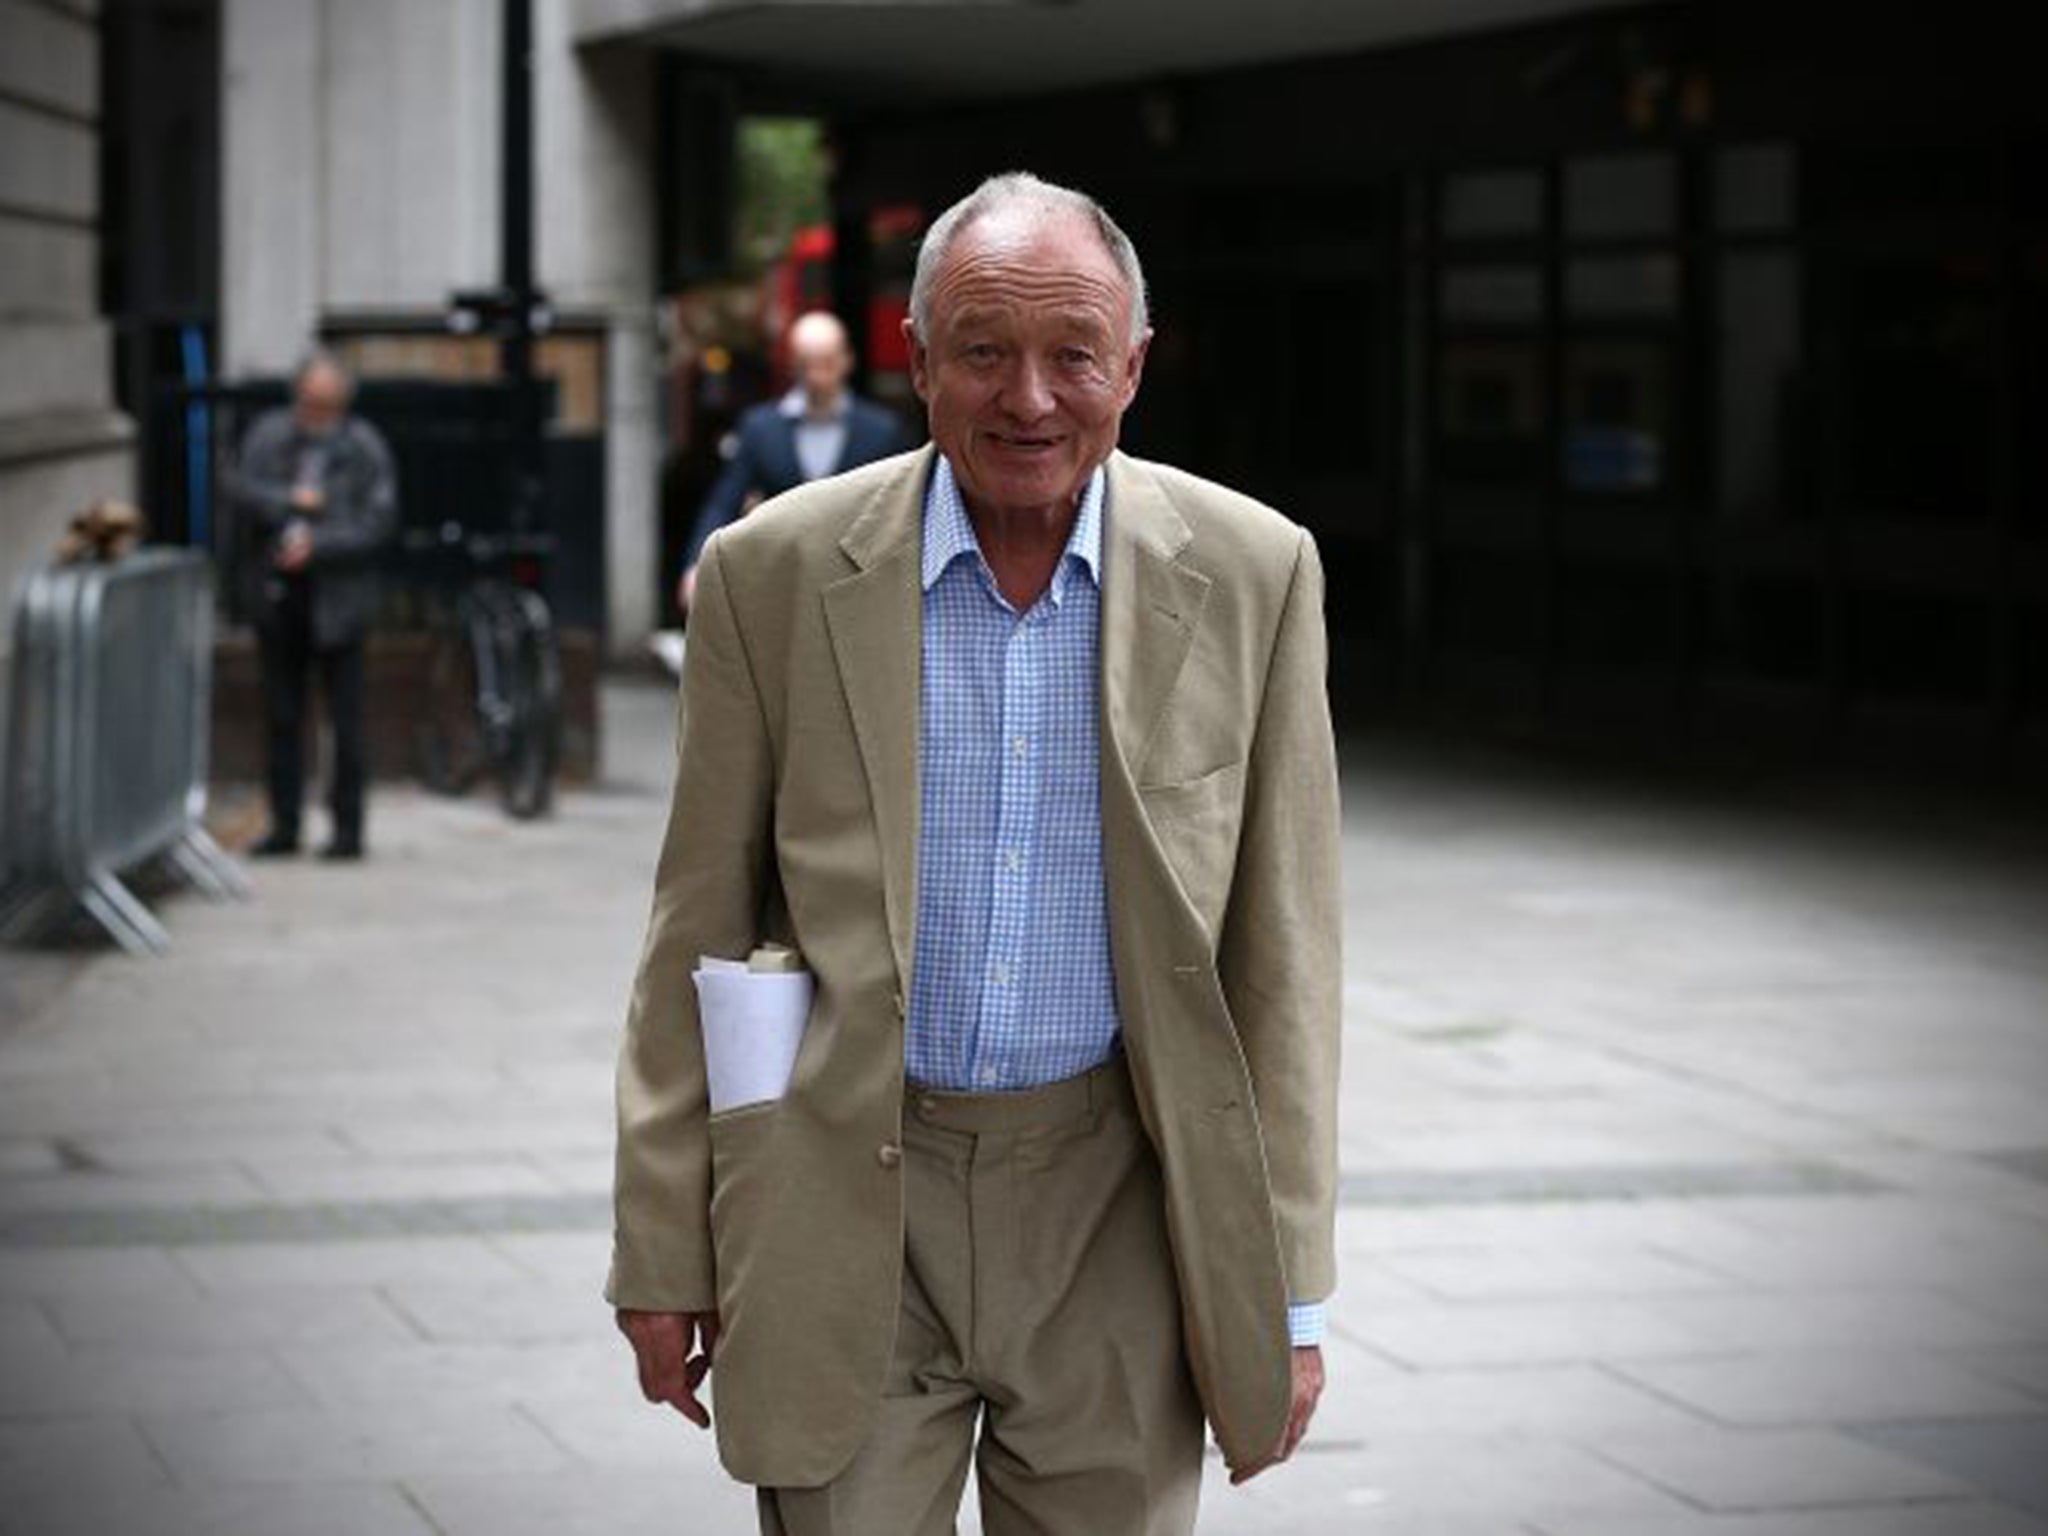 Ken Livingstone defended his taking £8,000 for a speech